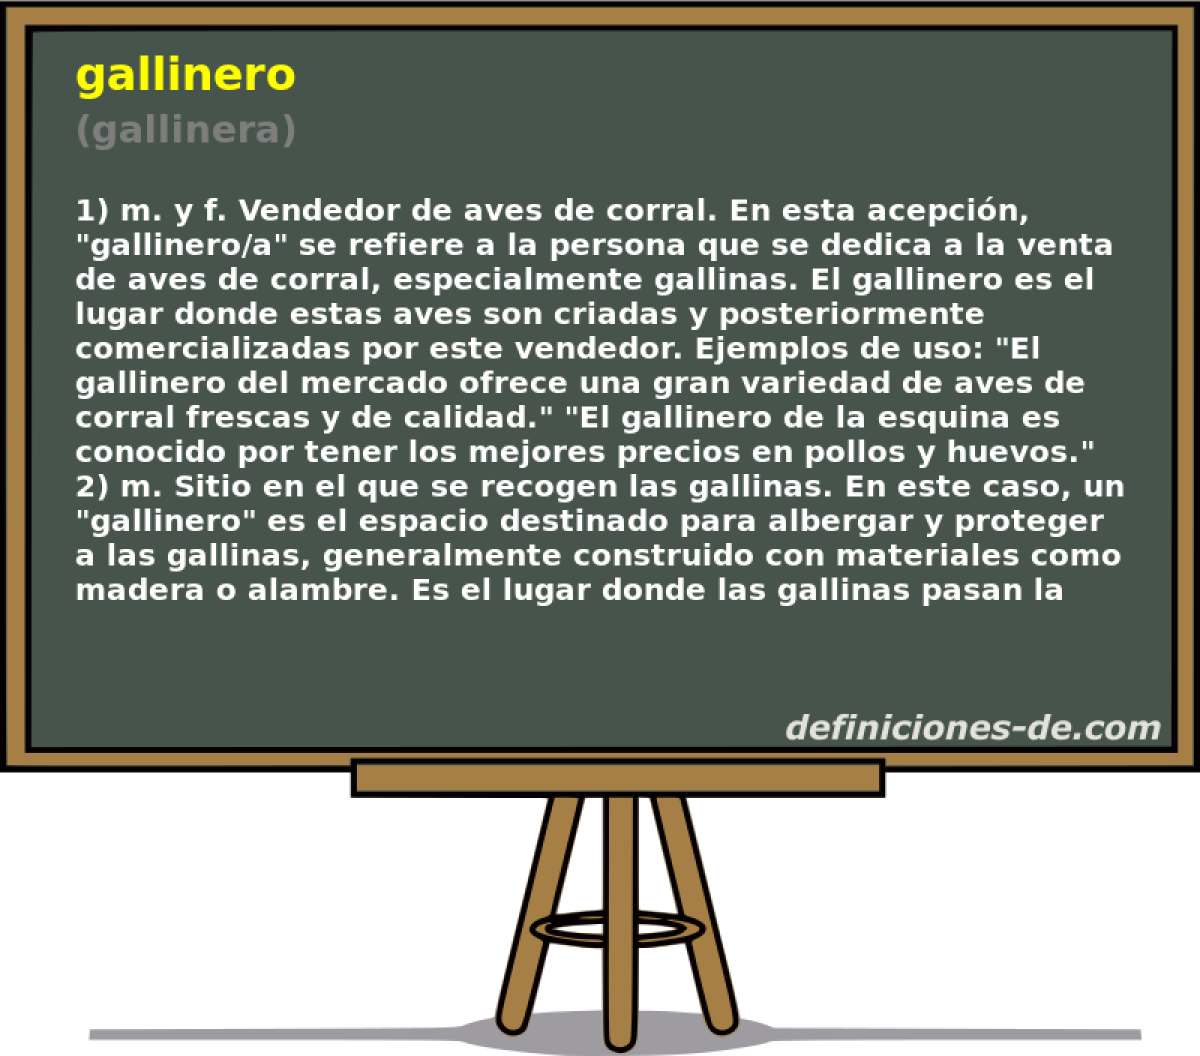 gallinero (gallinera)